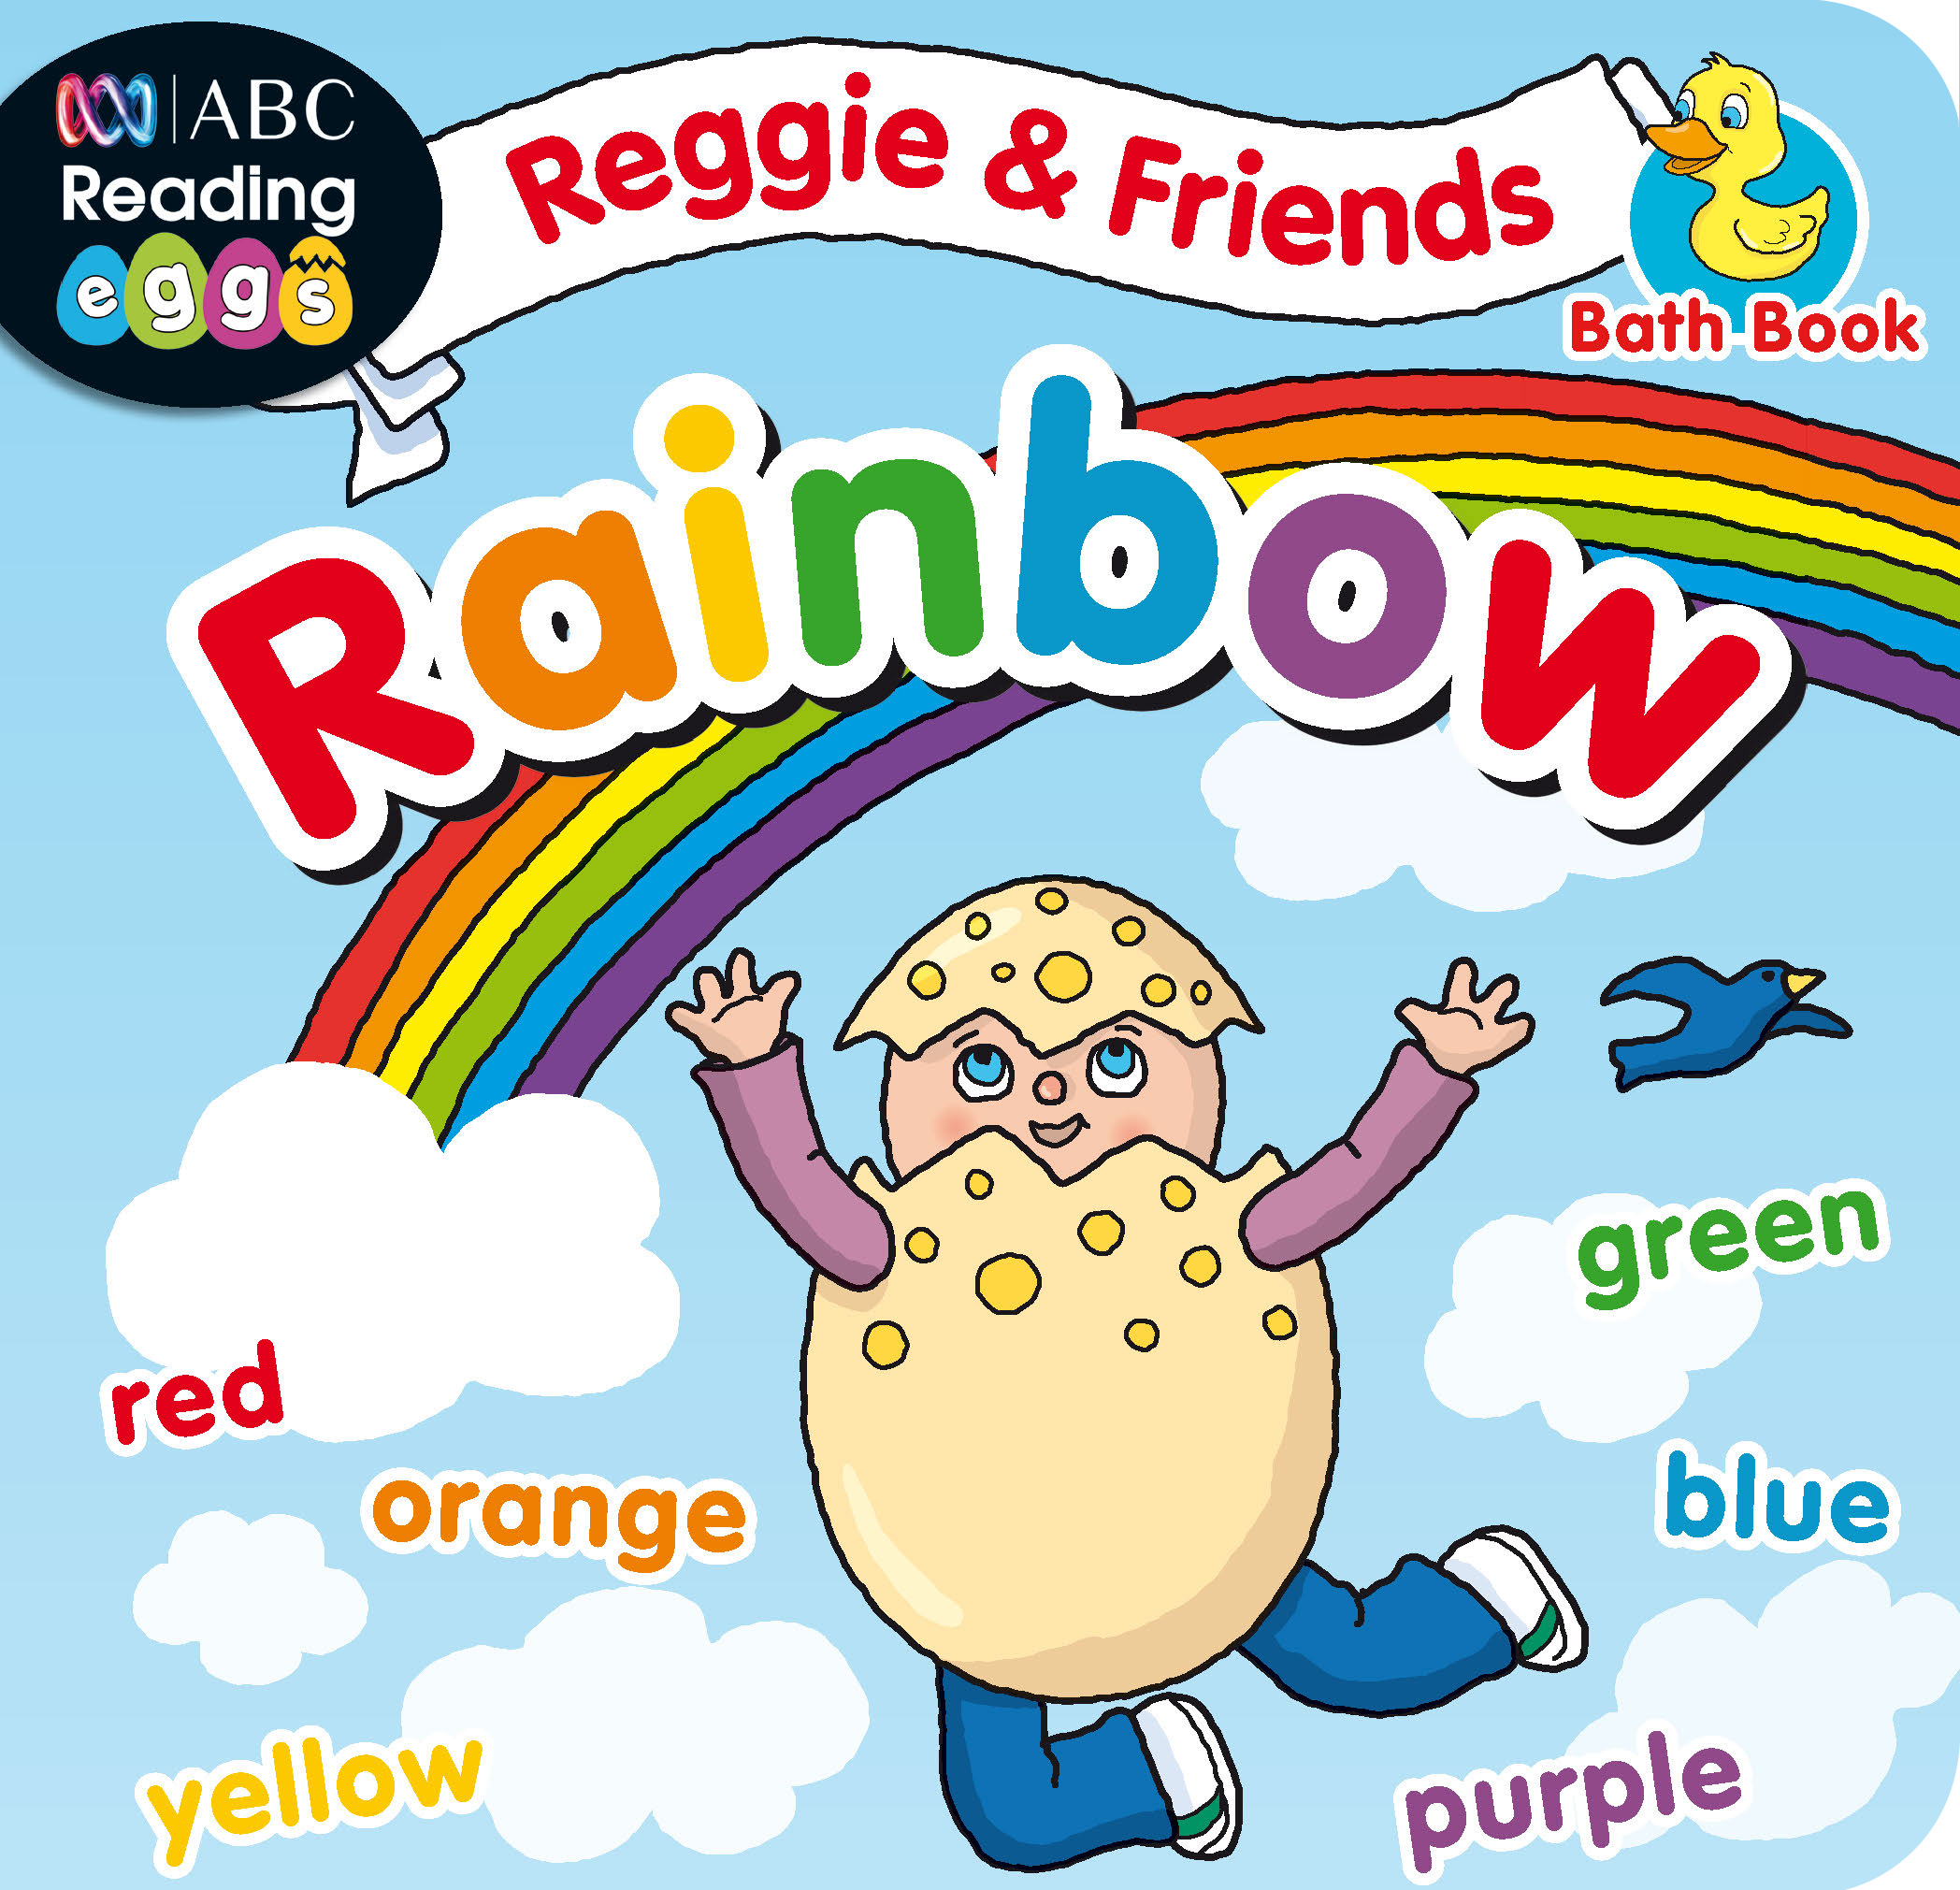 Picture of ABC Reading Eggs Bath Book - Reggie & Friends: Rainbow